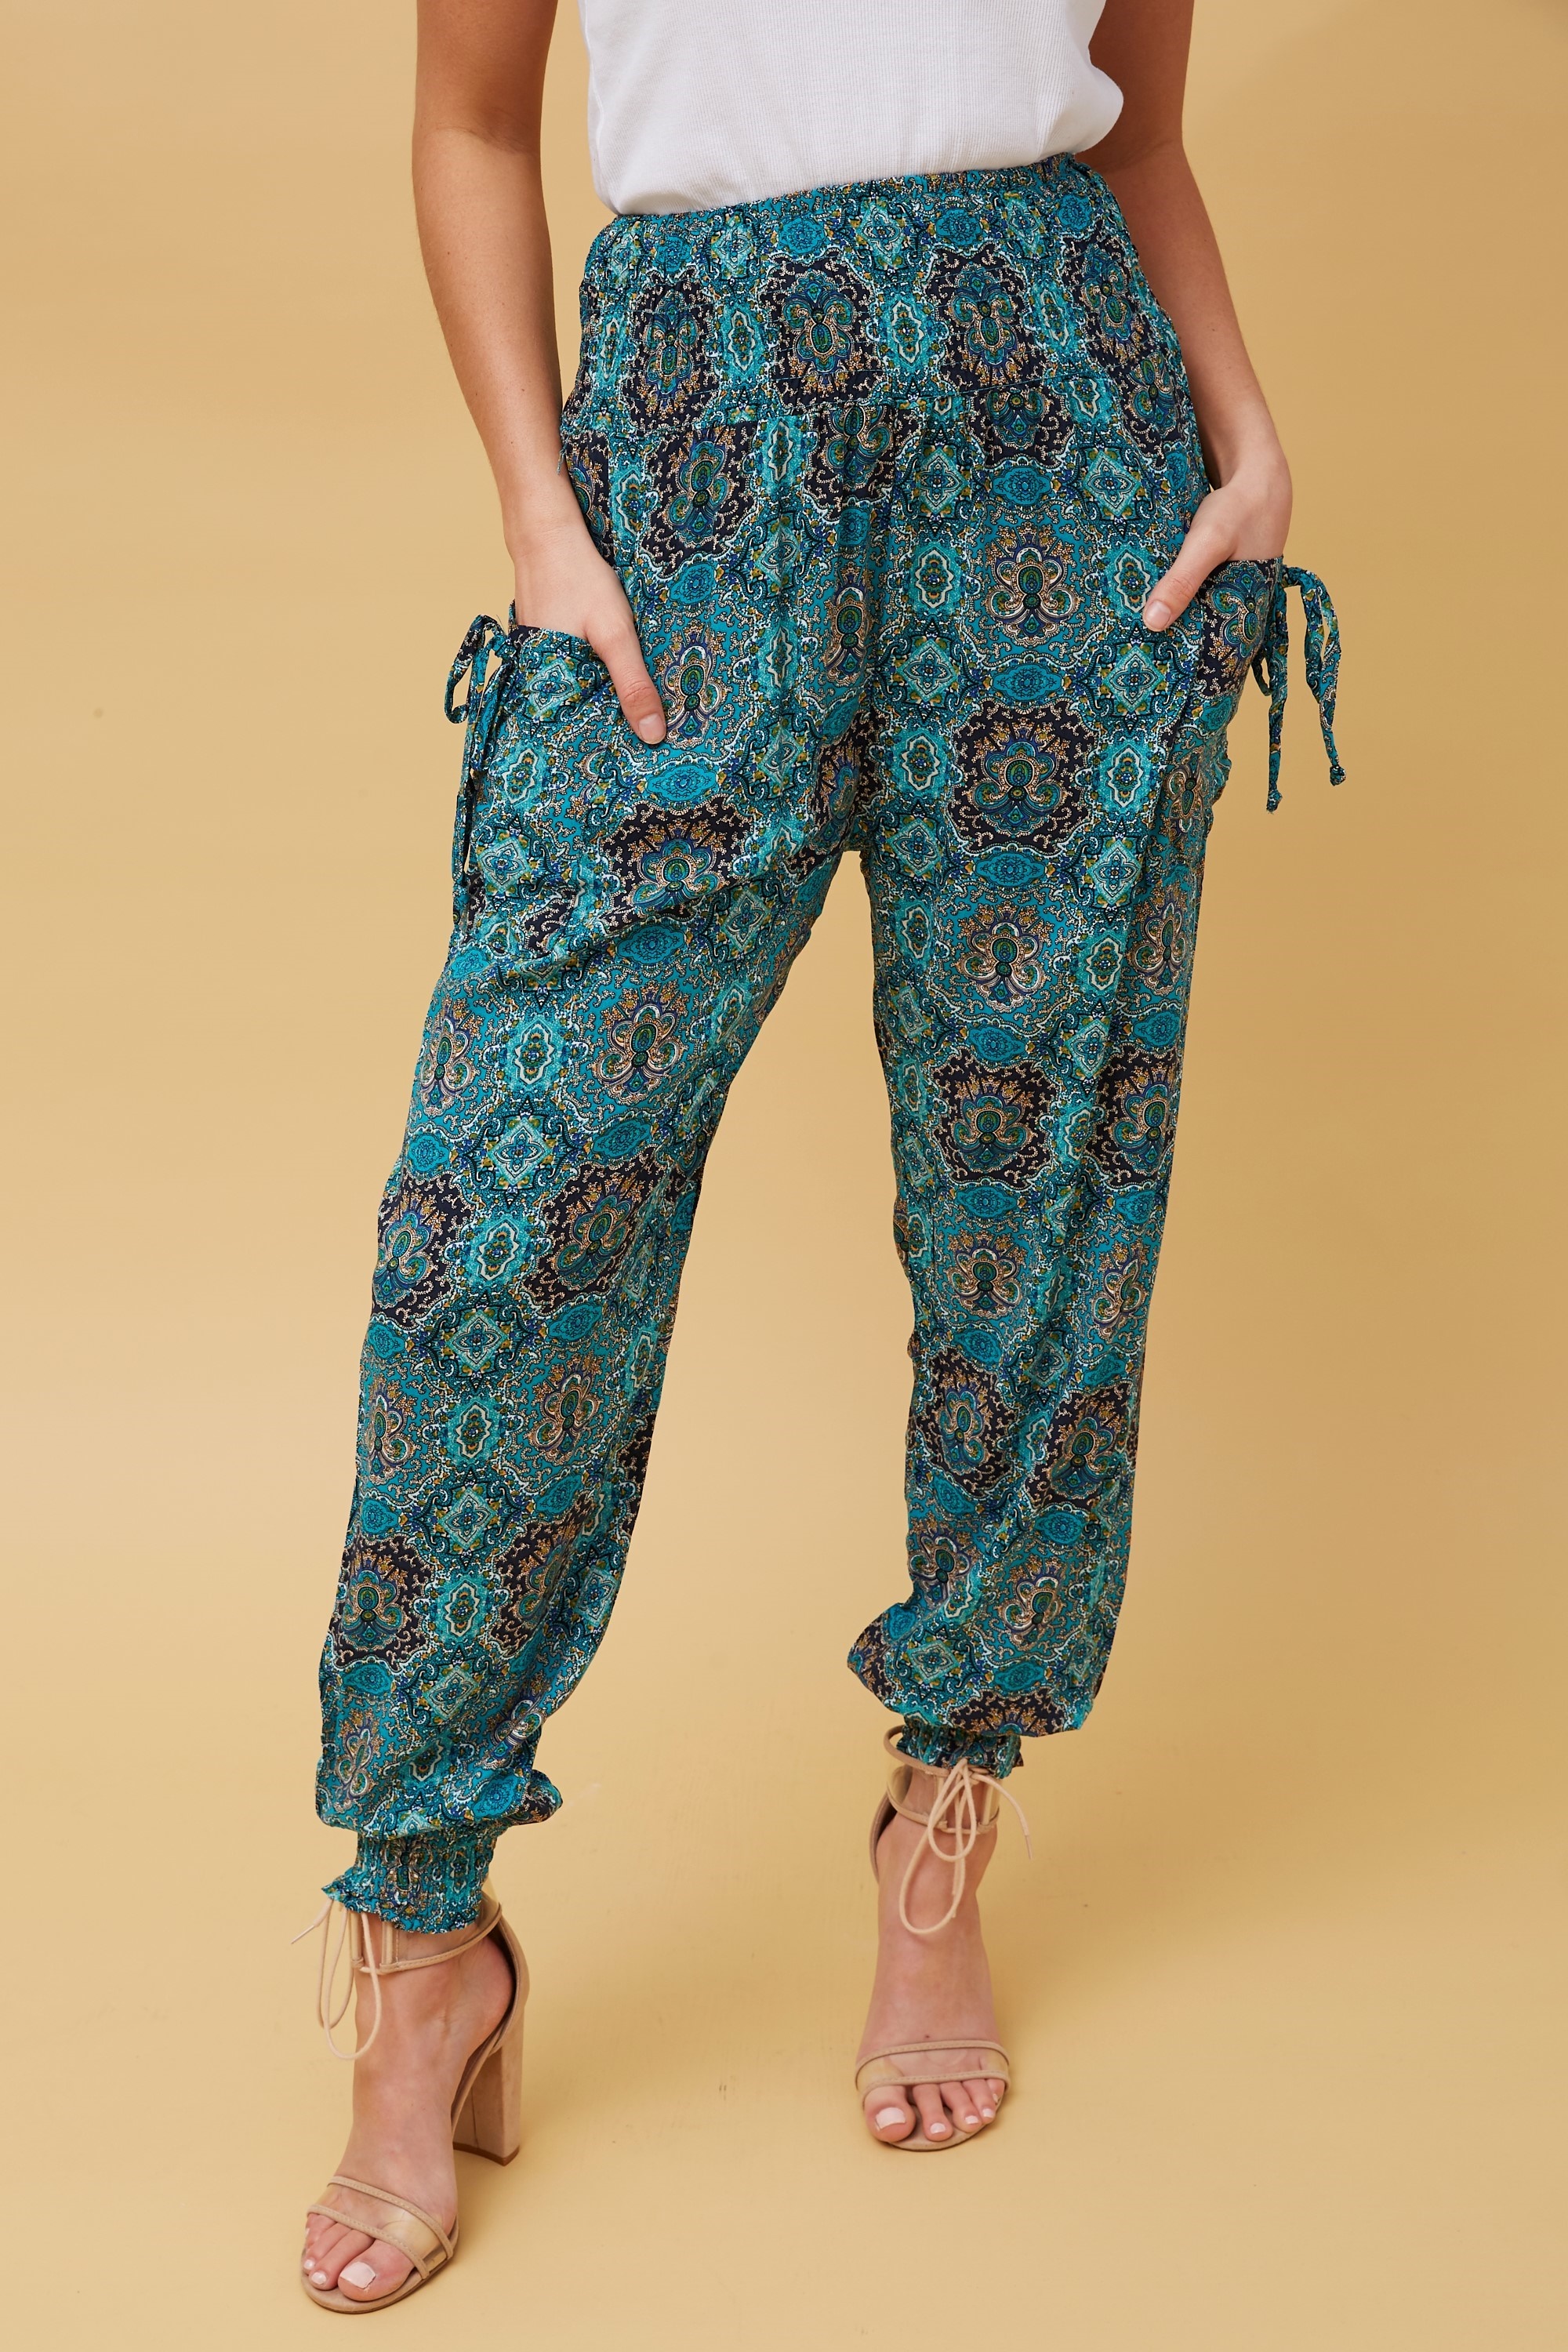 Fair Trade Harem Pants - Classic Colors | Shop Handmade at Malisun - malisun